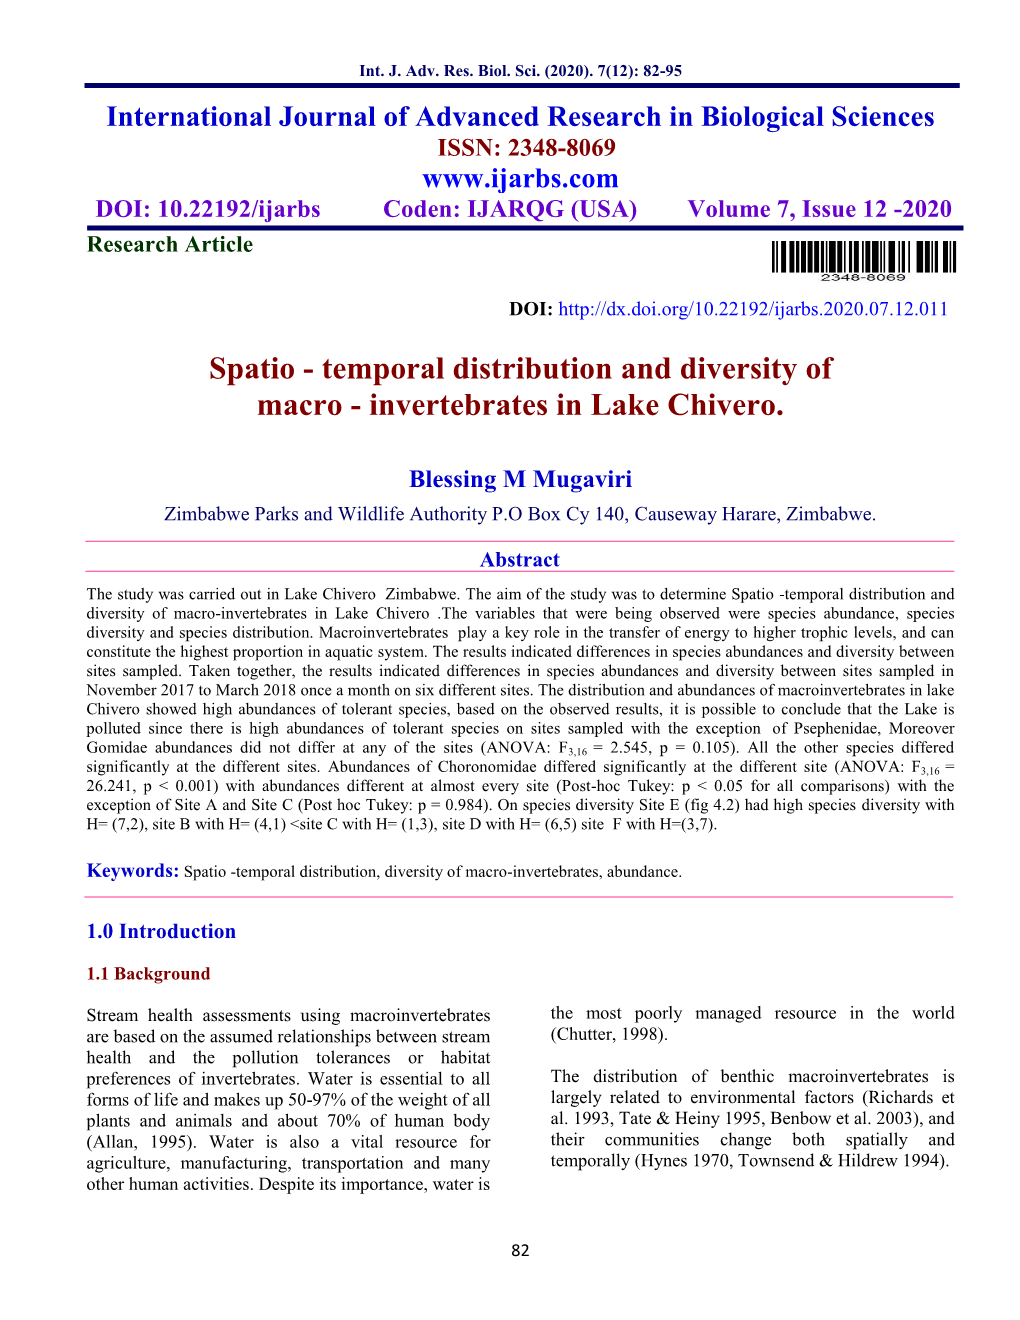 Spatio - Temporal Distribution and Diversity of Macro - Invertebrates in Lake Chivero